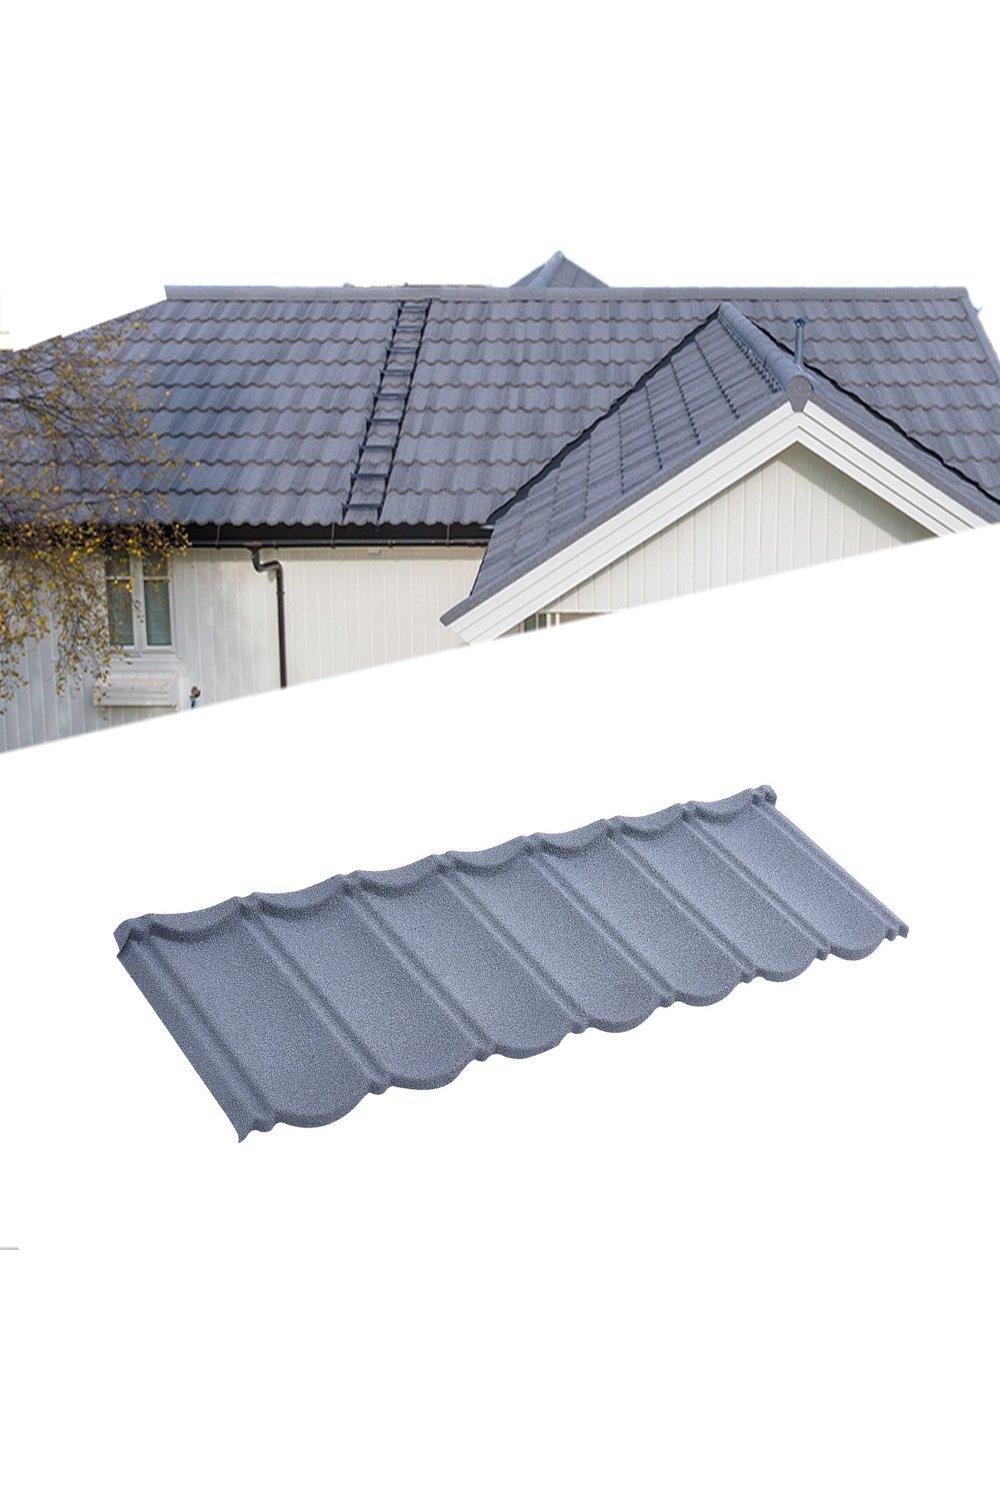 5Pcs Bond Tile Stone Coated Metal Roofing Shingles